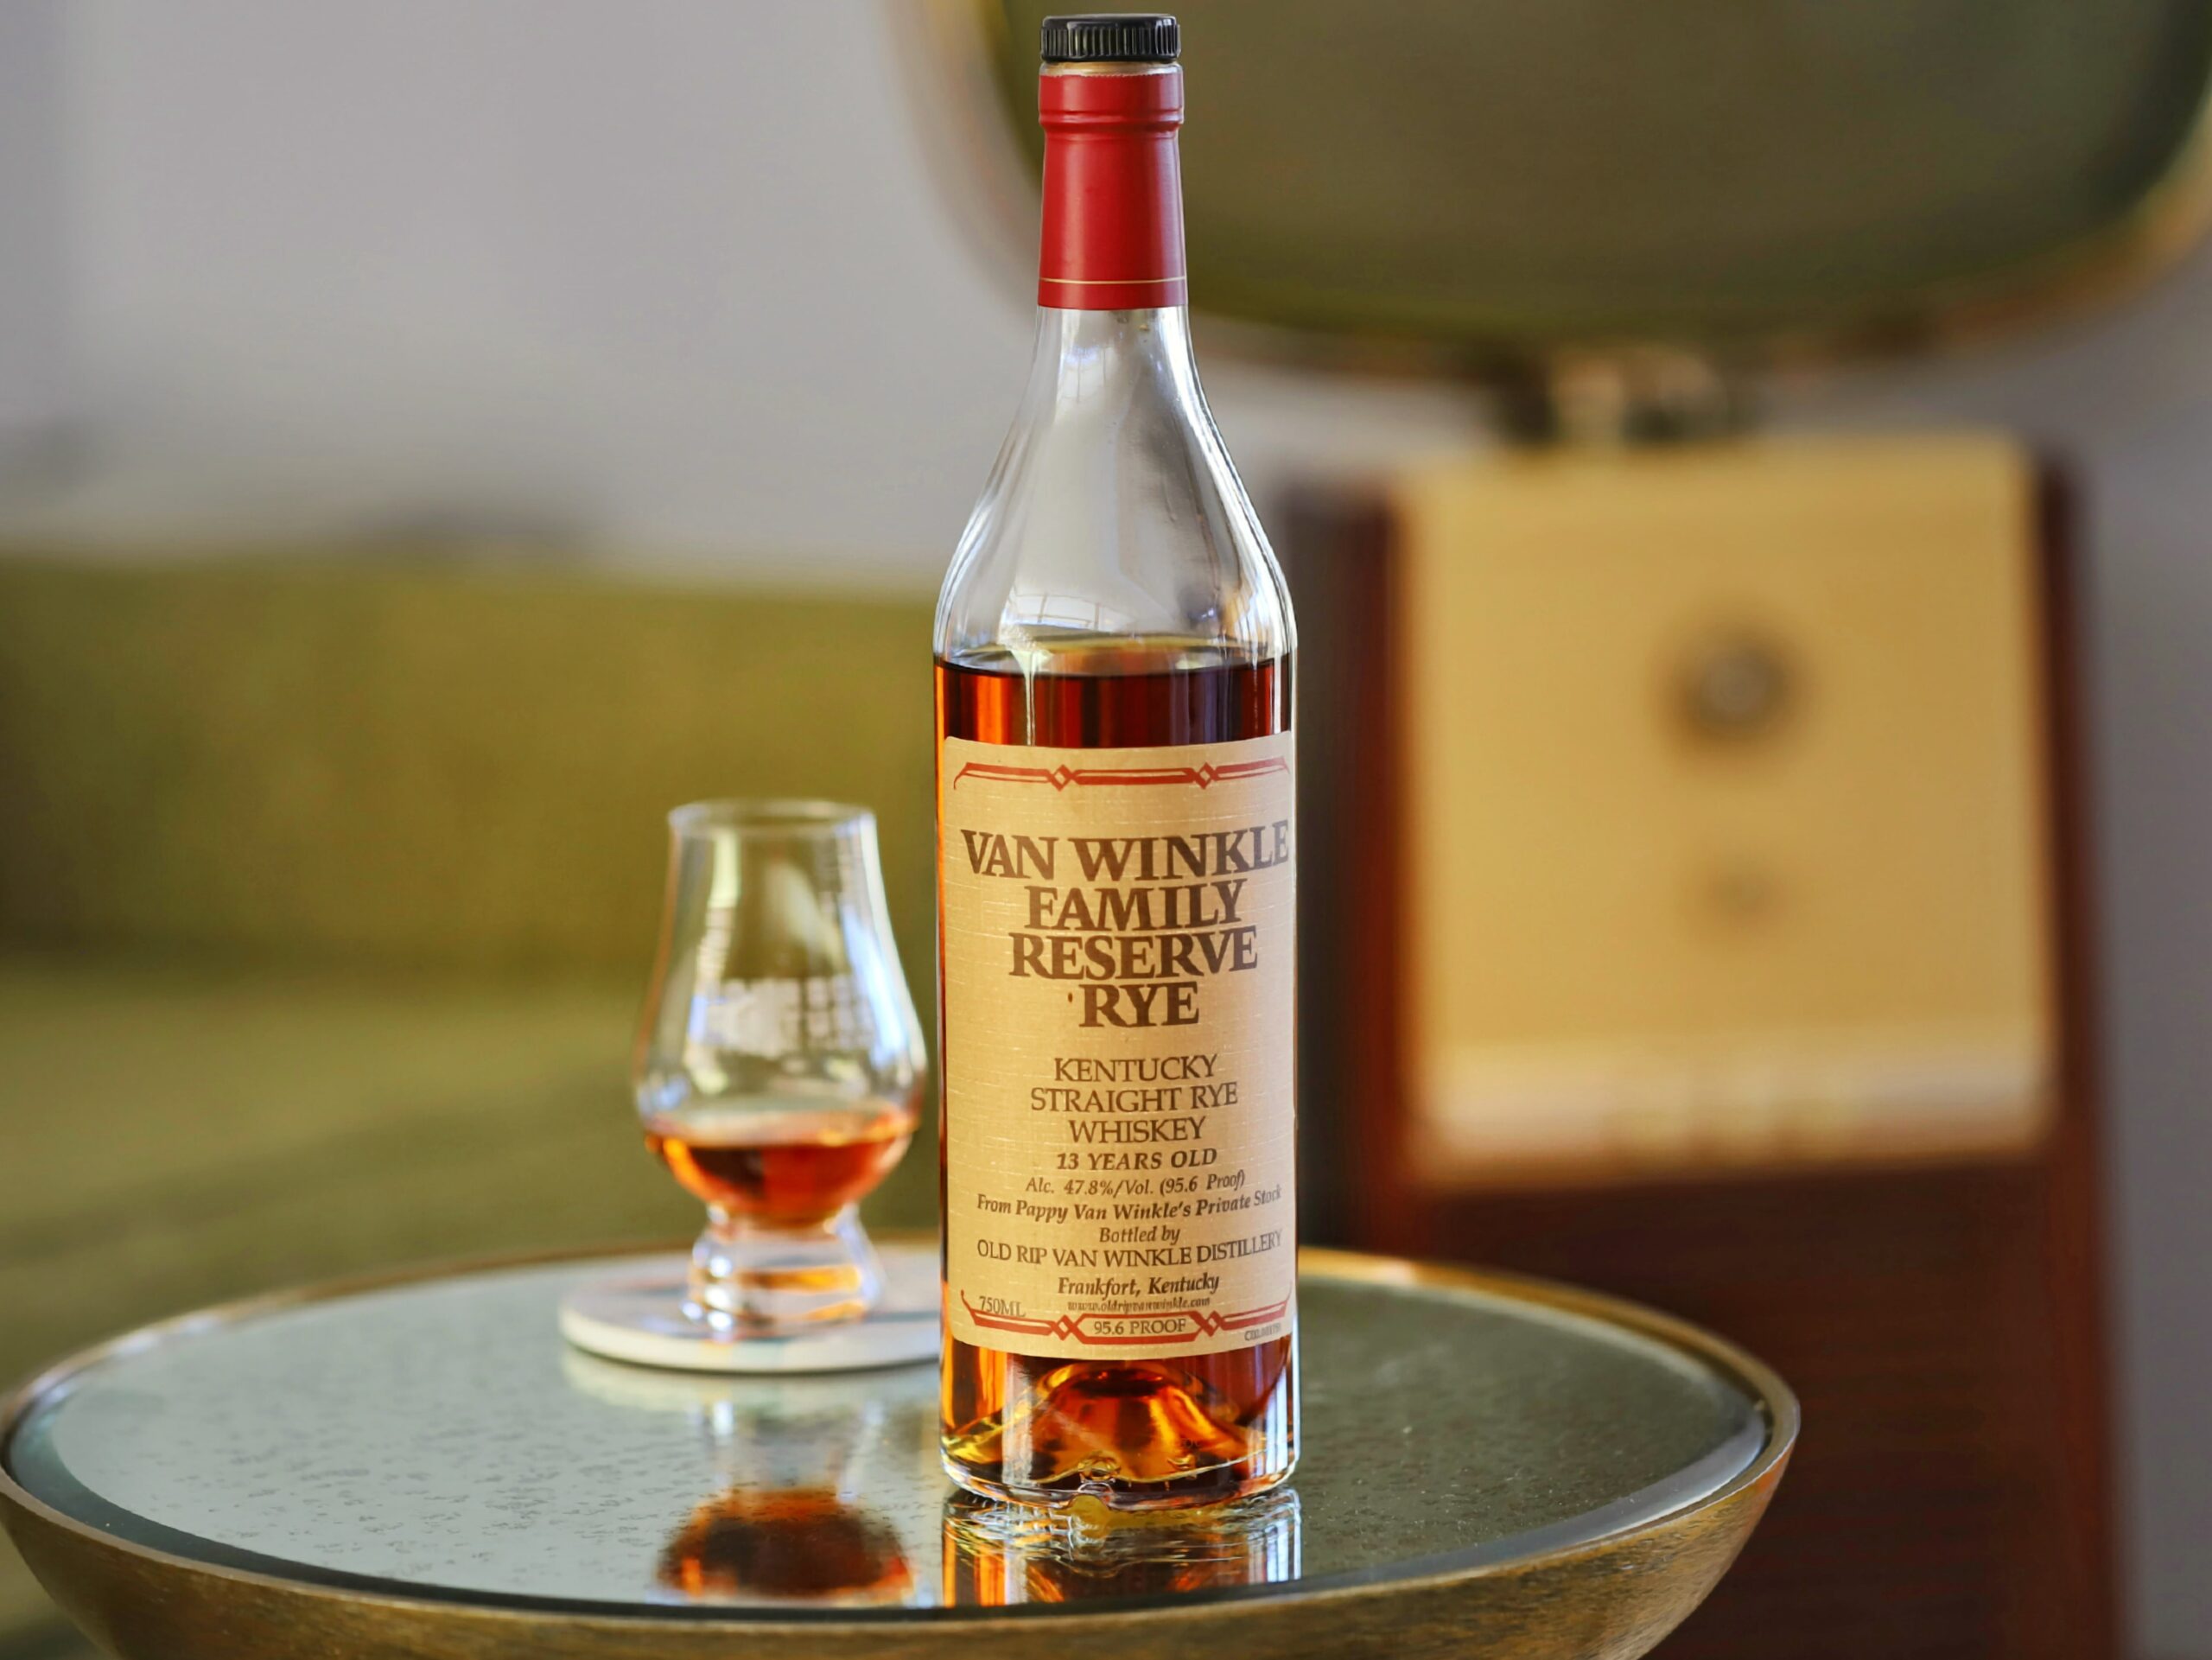 Van Winkle Family Reserve Rye Whiskey Review